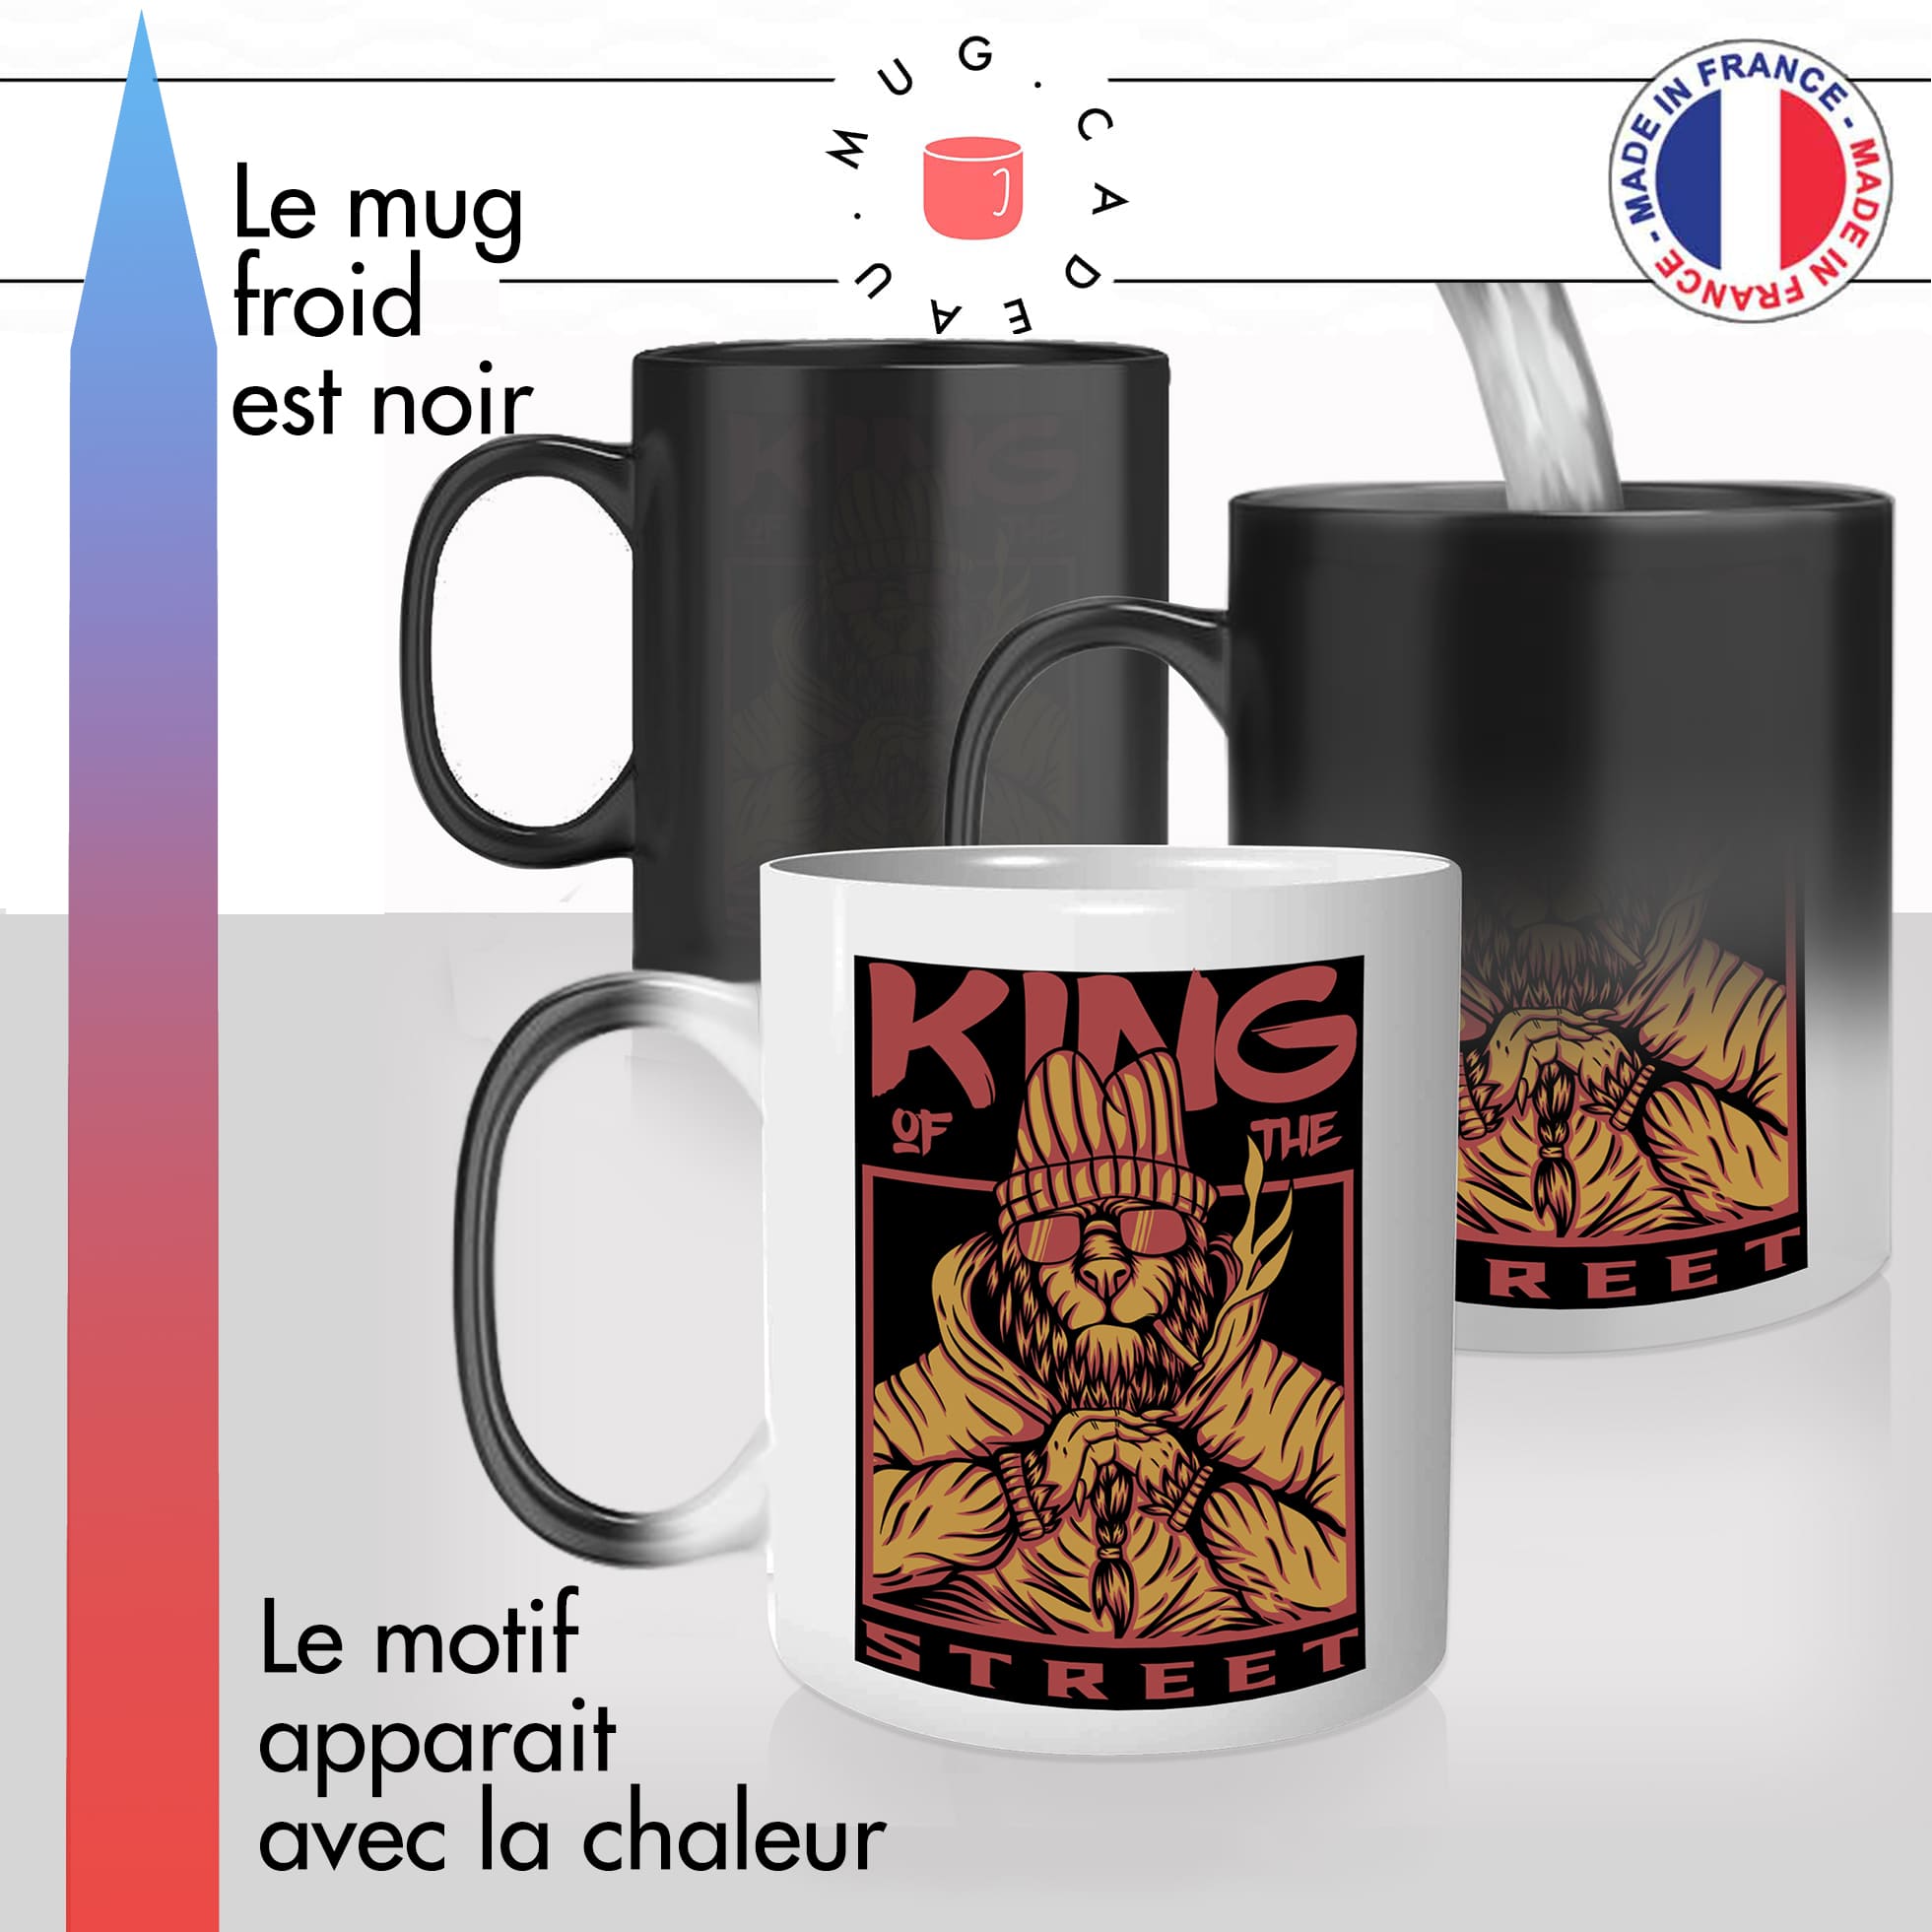 mug magique thermoreactif thermochauffant personnalisé lion king of the street thug roi personnalisable idée cadeau fun